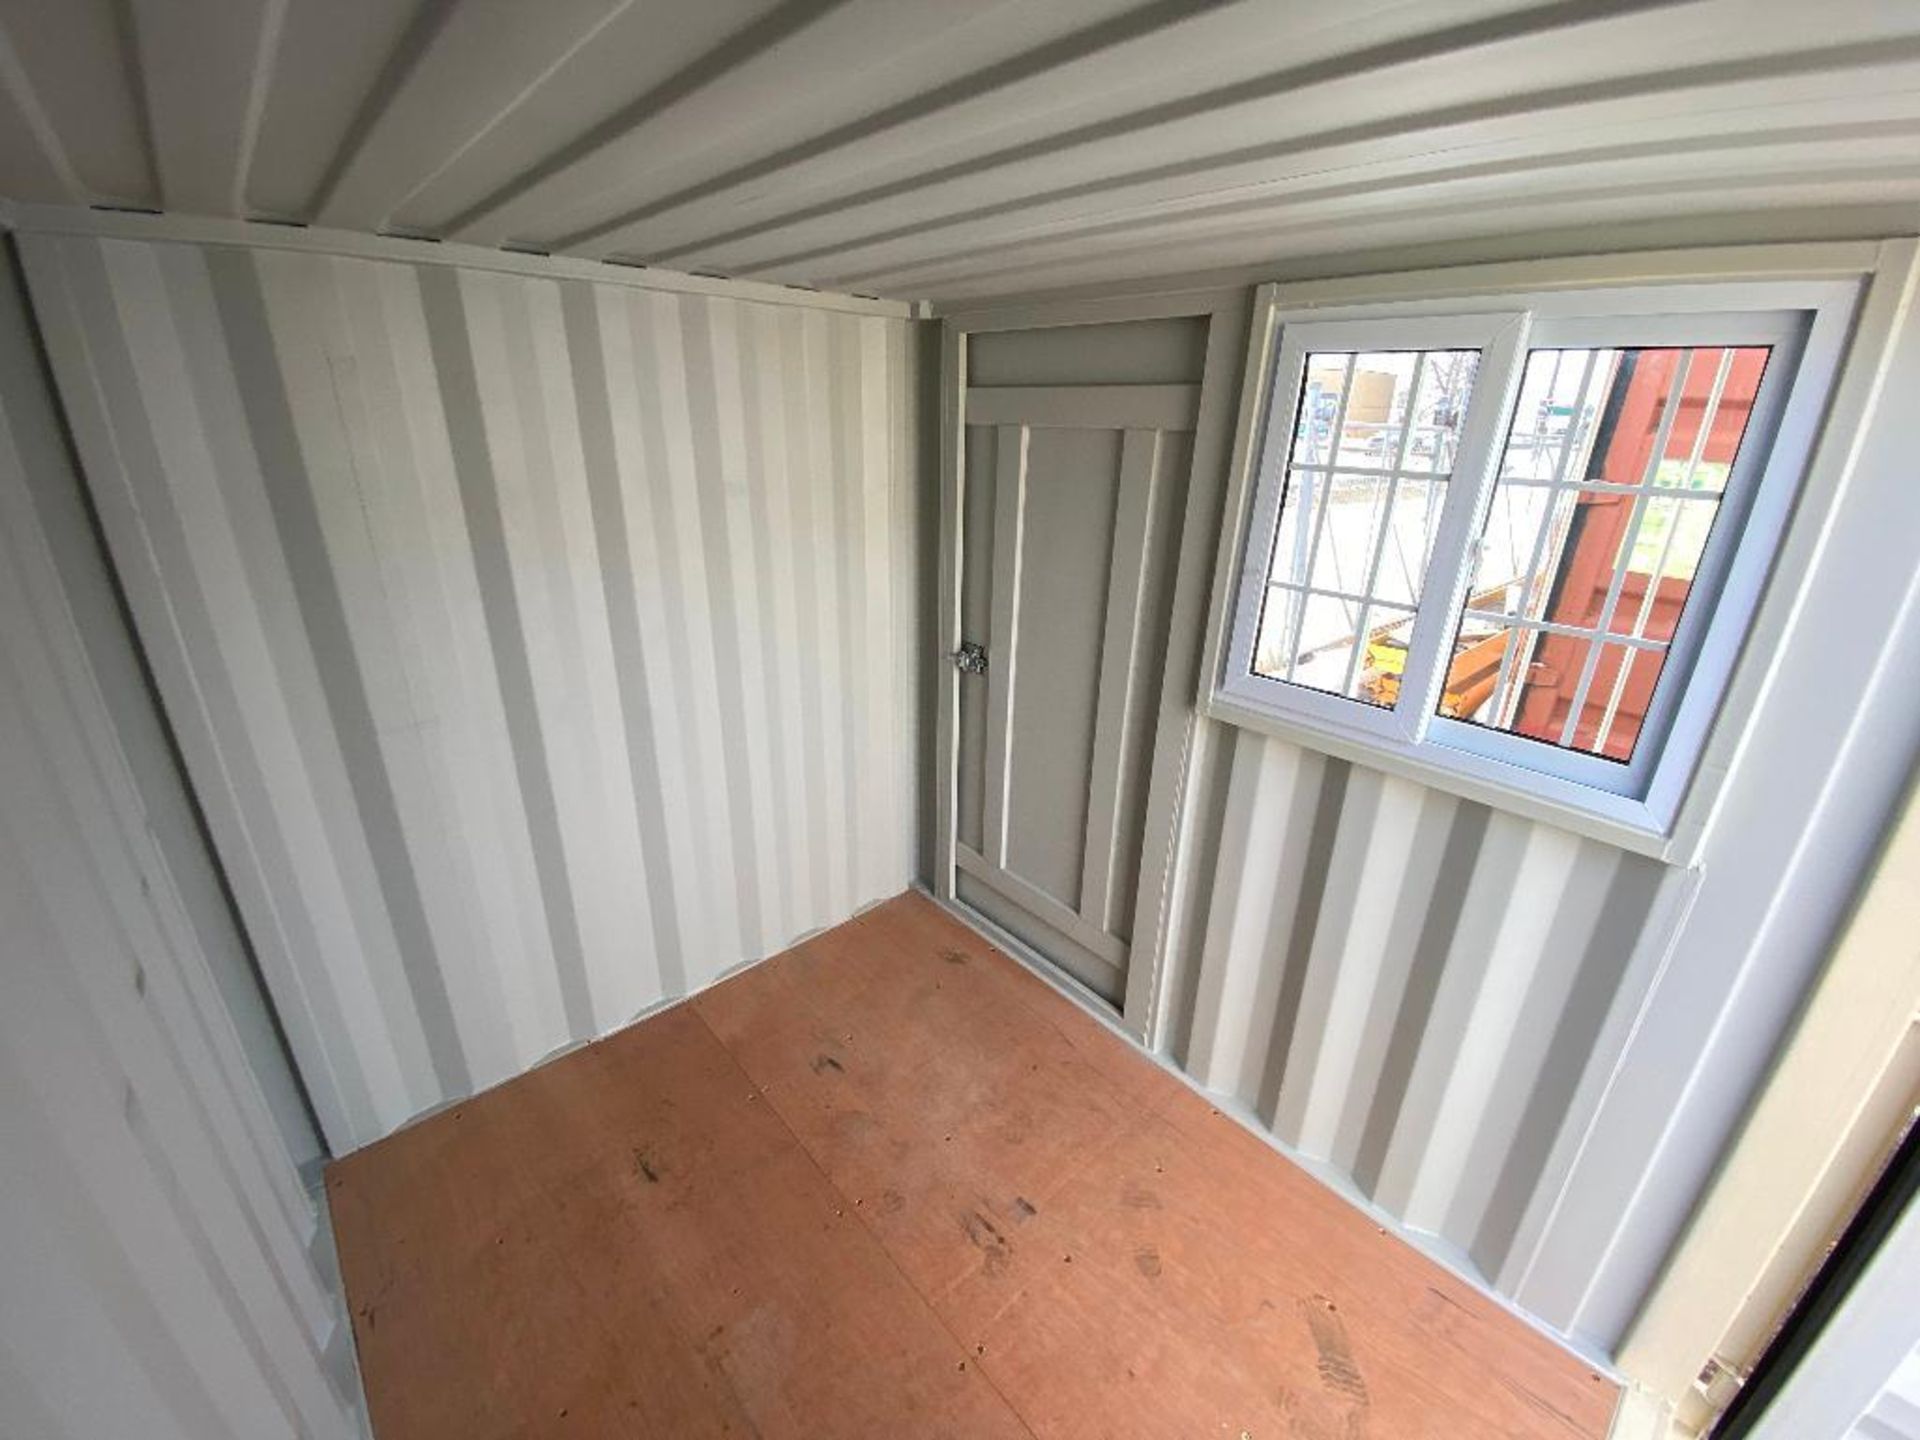 New 8' Shipping Container Complete with Barn Doors, (1) Man Door & Window - Image 5 of 5